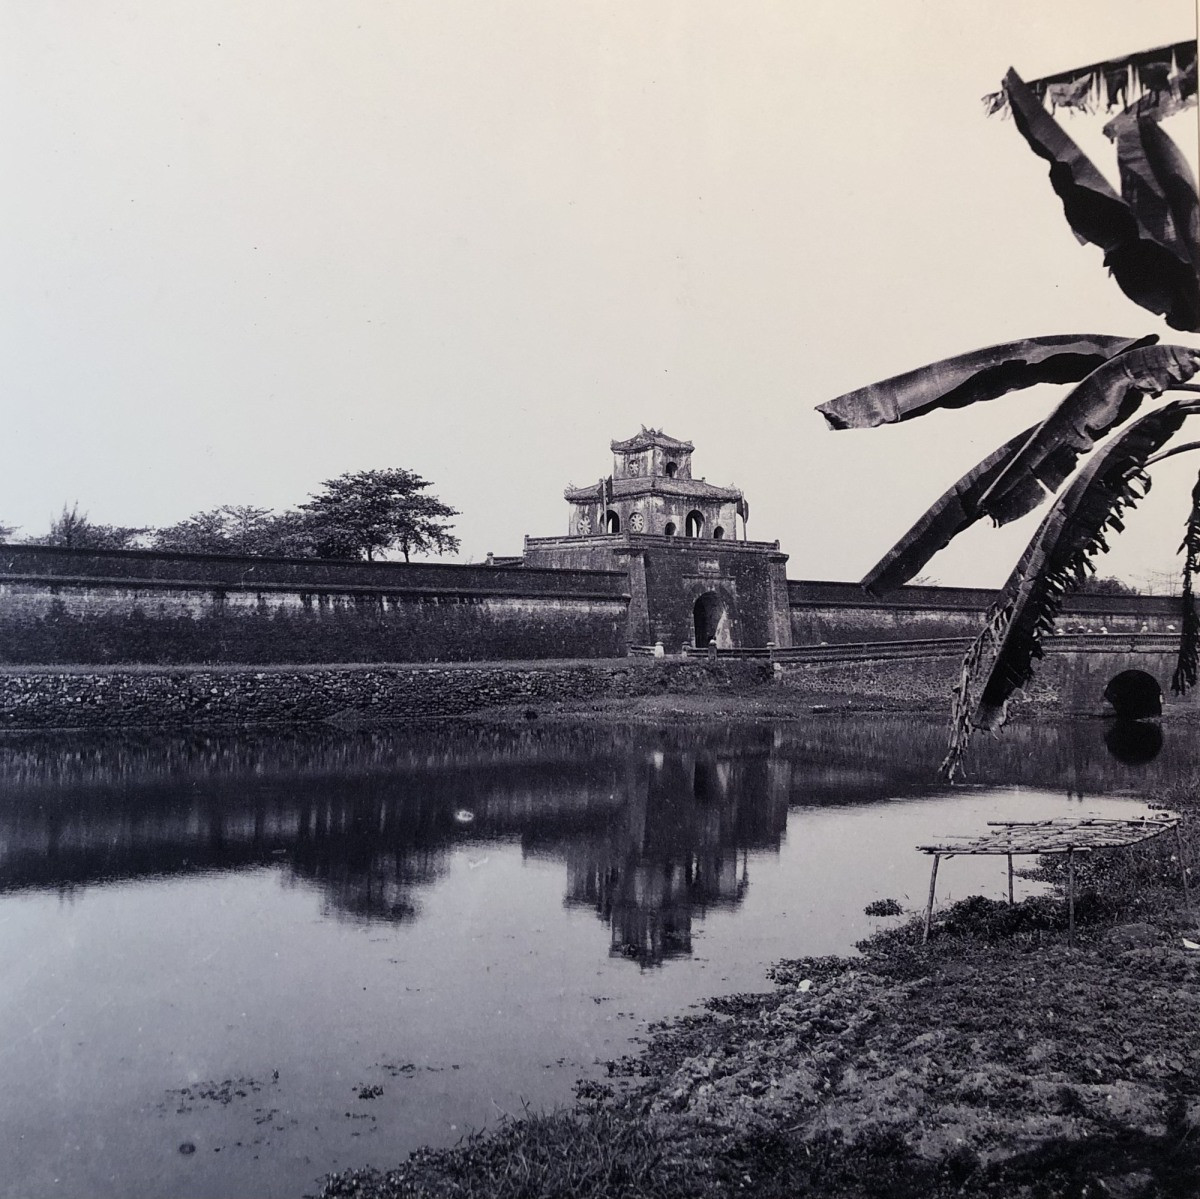 Mid-20th century Vietnam through Ukrainian photographer's lenses